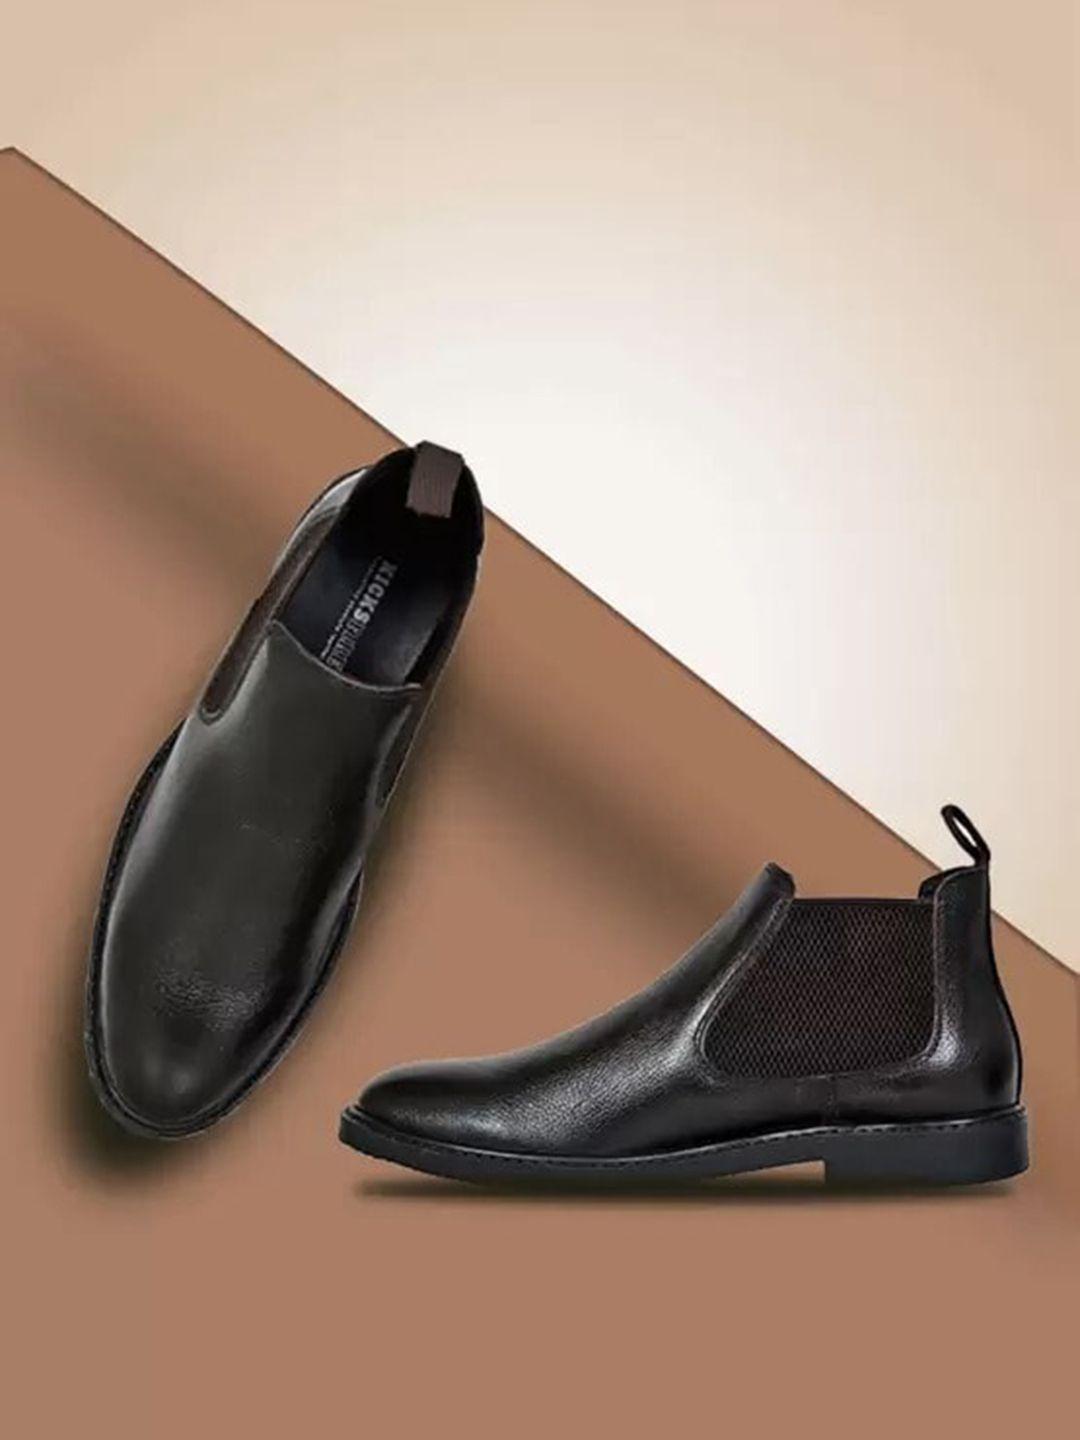 kicksfire men block-heeled genuine leather chelsea boots